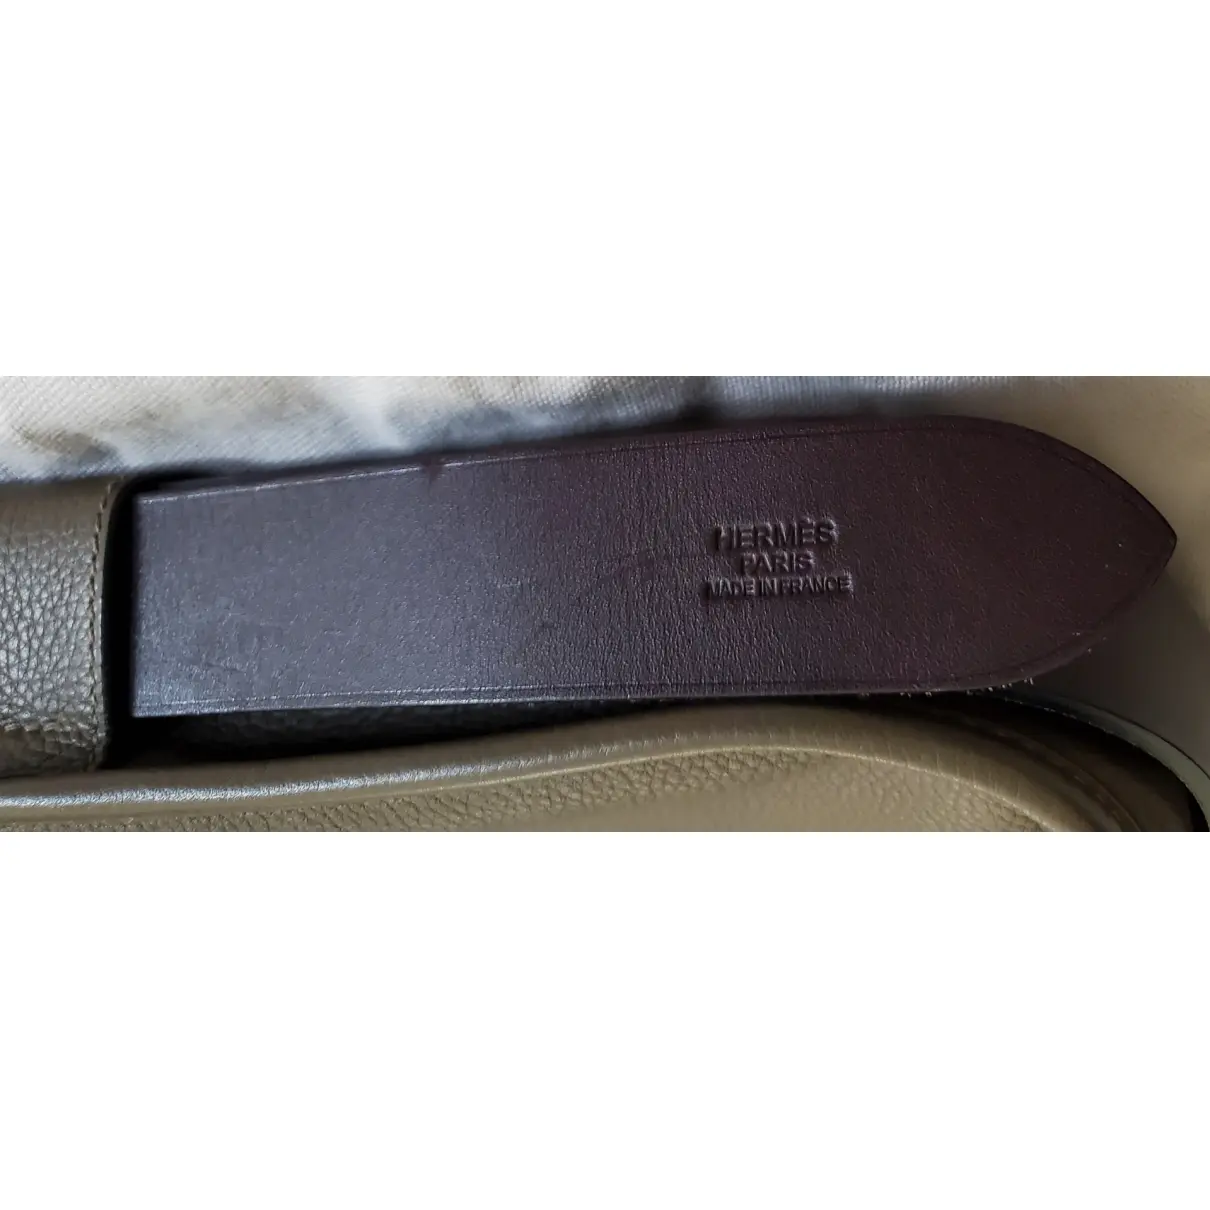 Buy Hermès Leather bag online